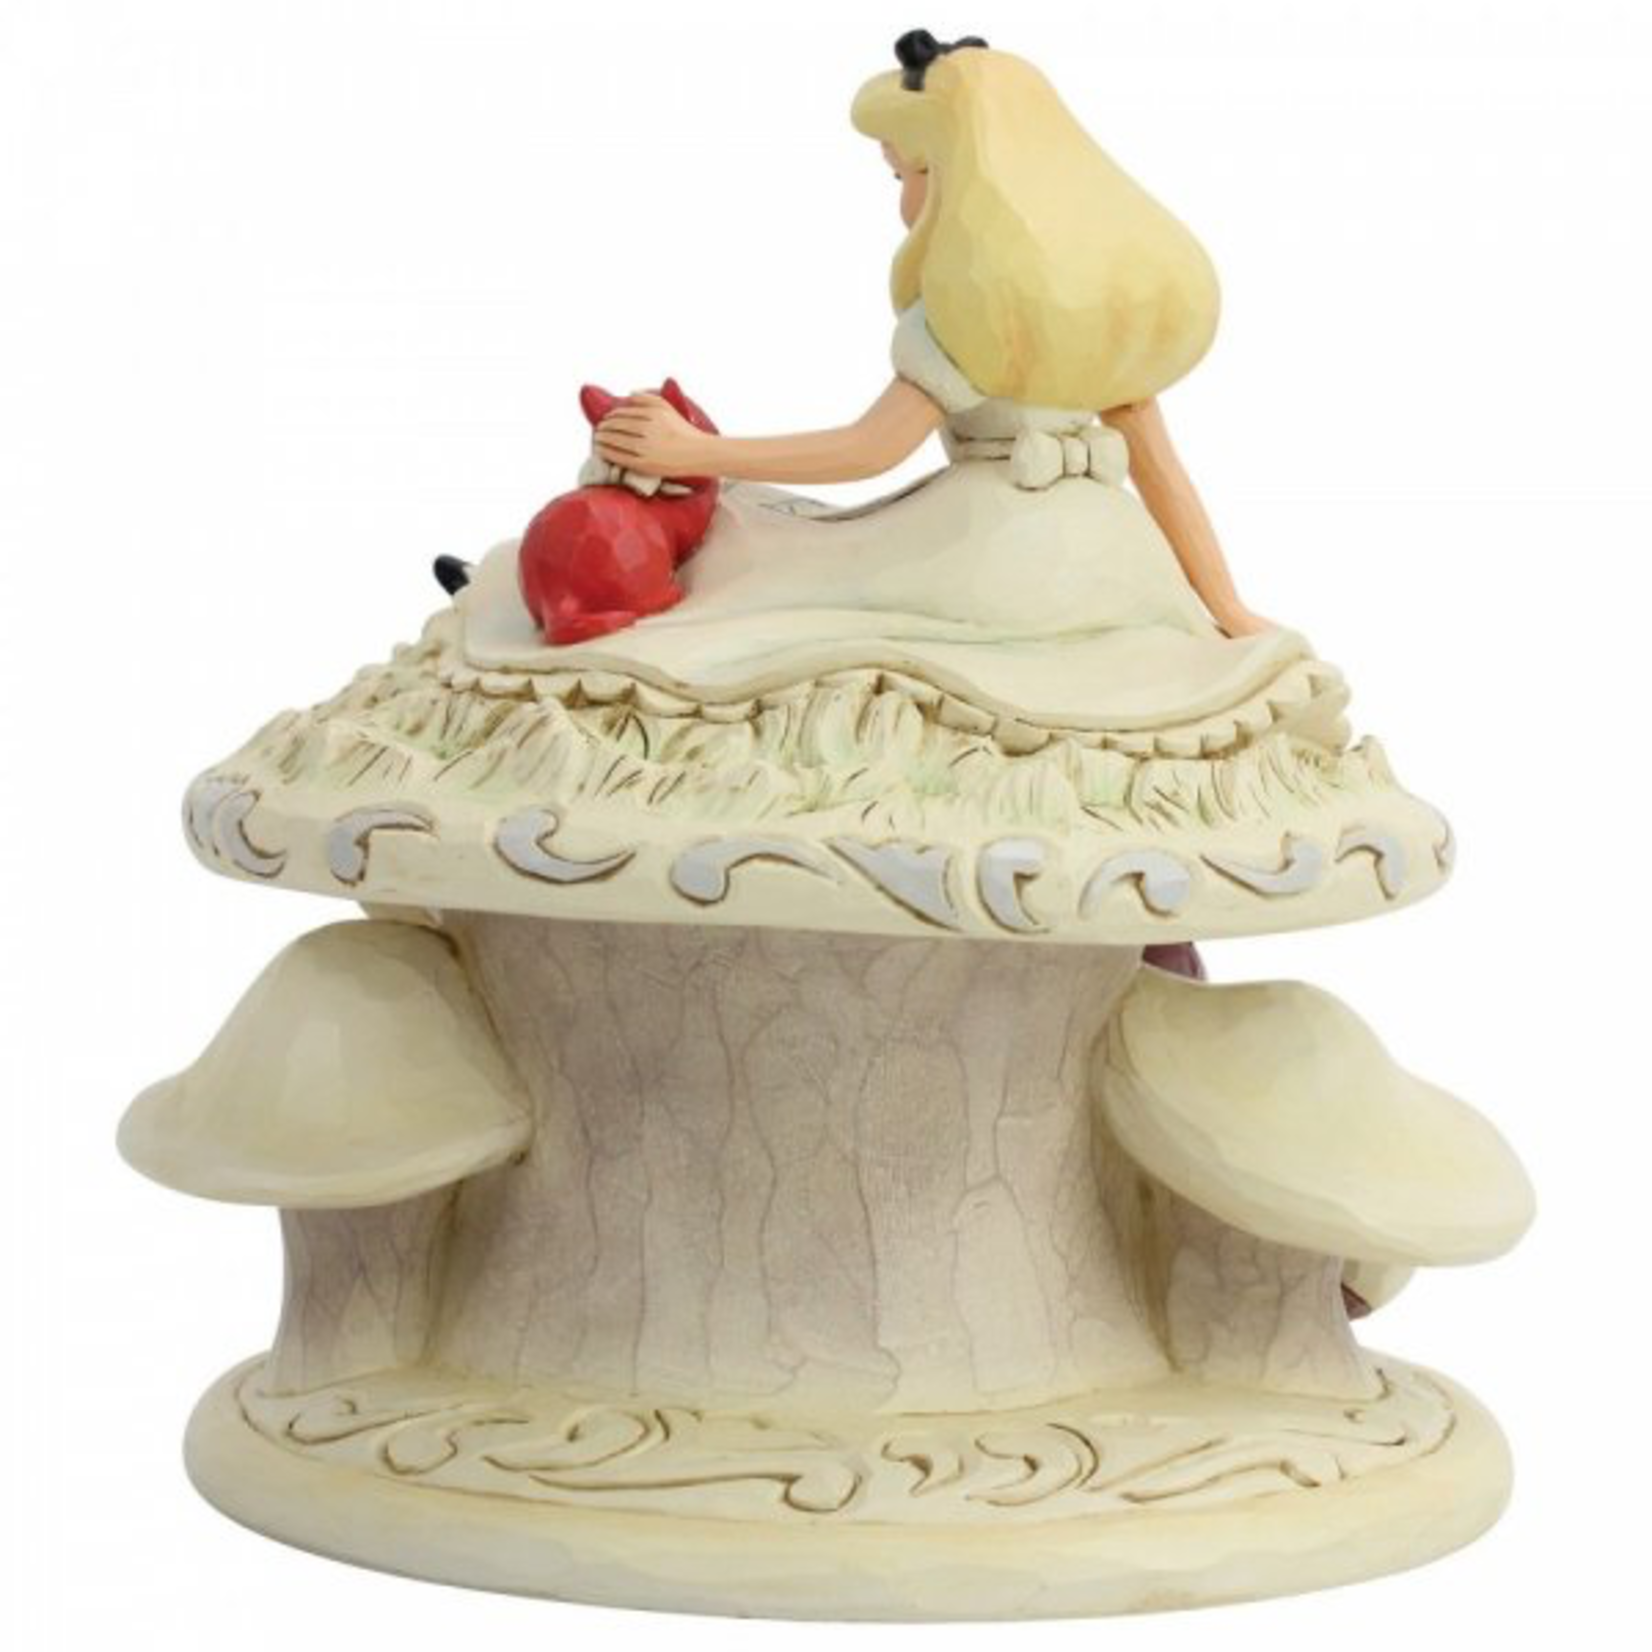 Disney Traditions Disney - Alice in Wonderland Whimsy and Wonder Figurine - White Woodland